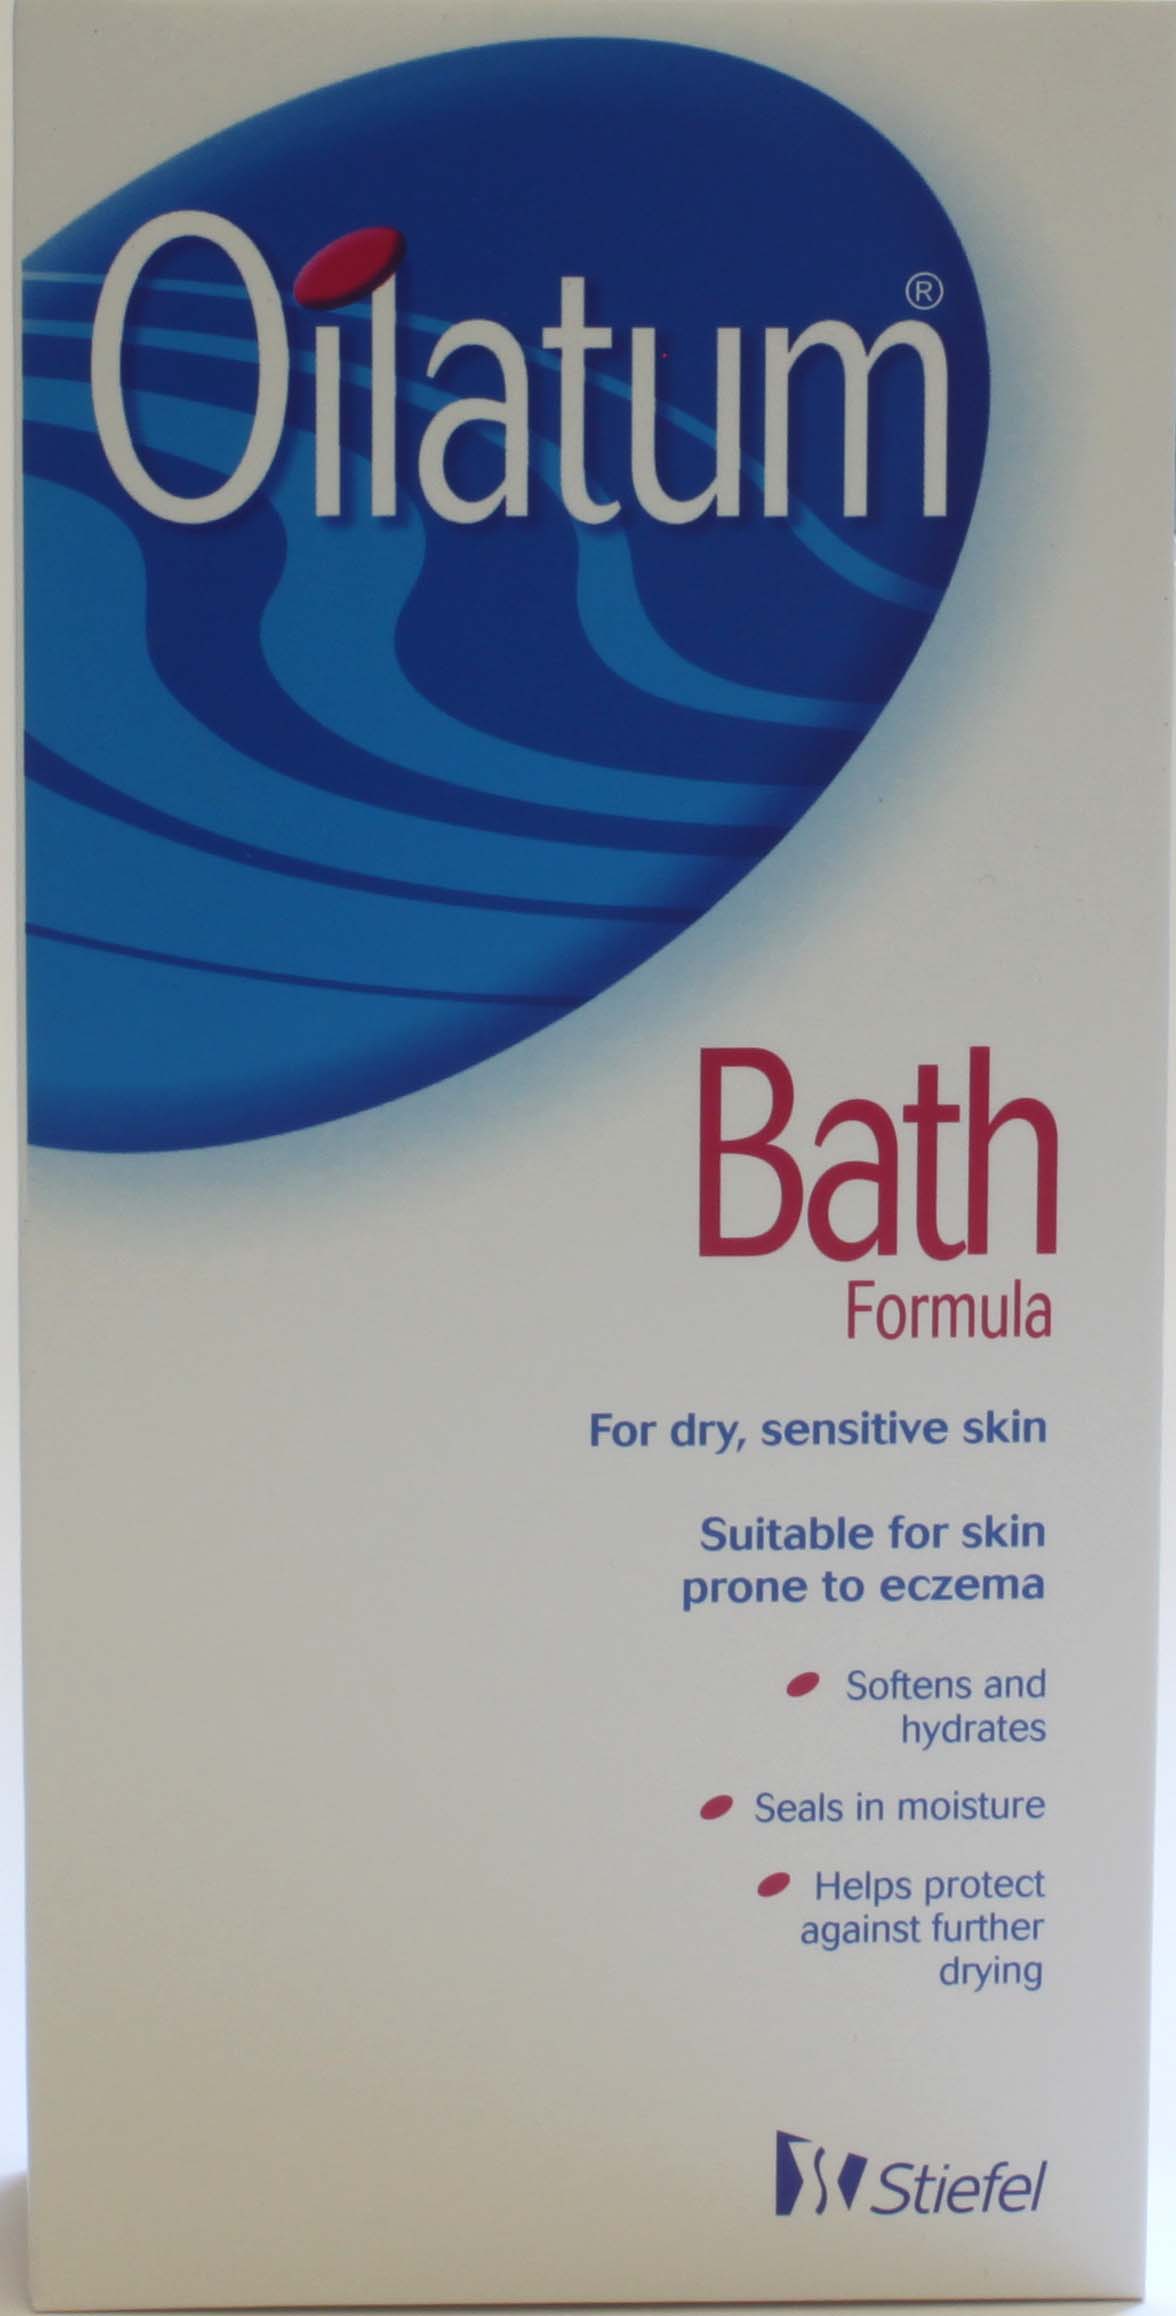 Oilatum Bath Formula - 300 ml